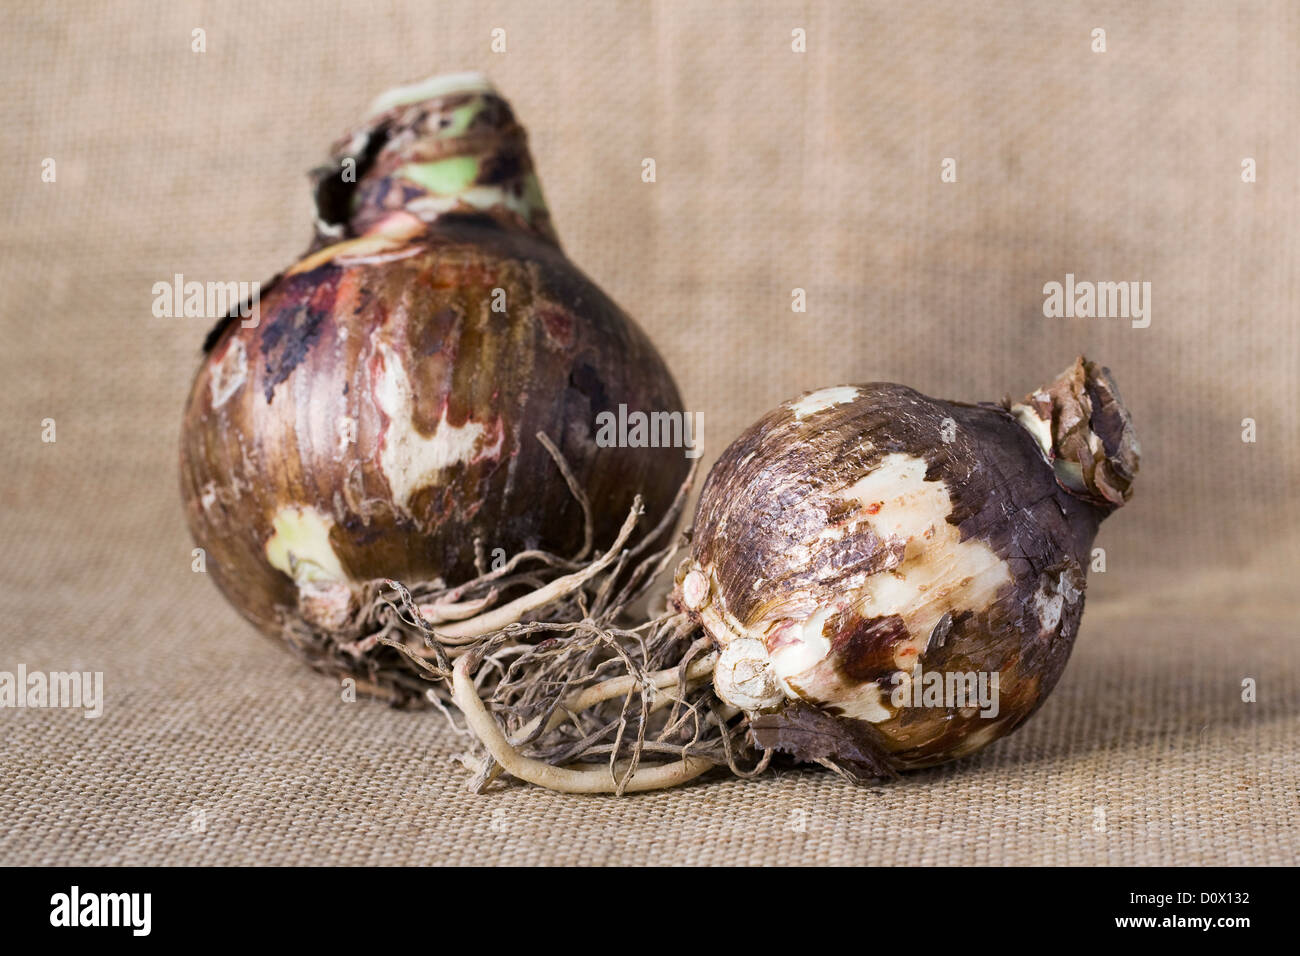 Two Hippeastrum bulbs on a hessian background. Amaryllis bulbs. Stock Photo